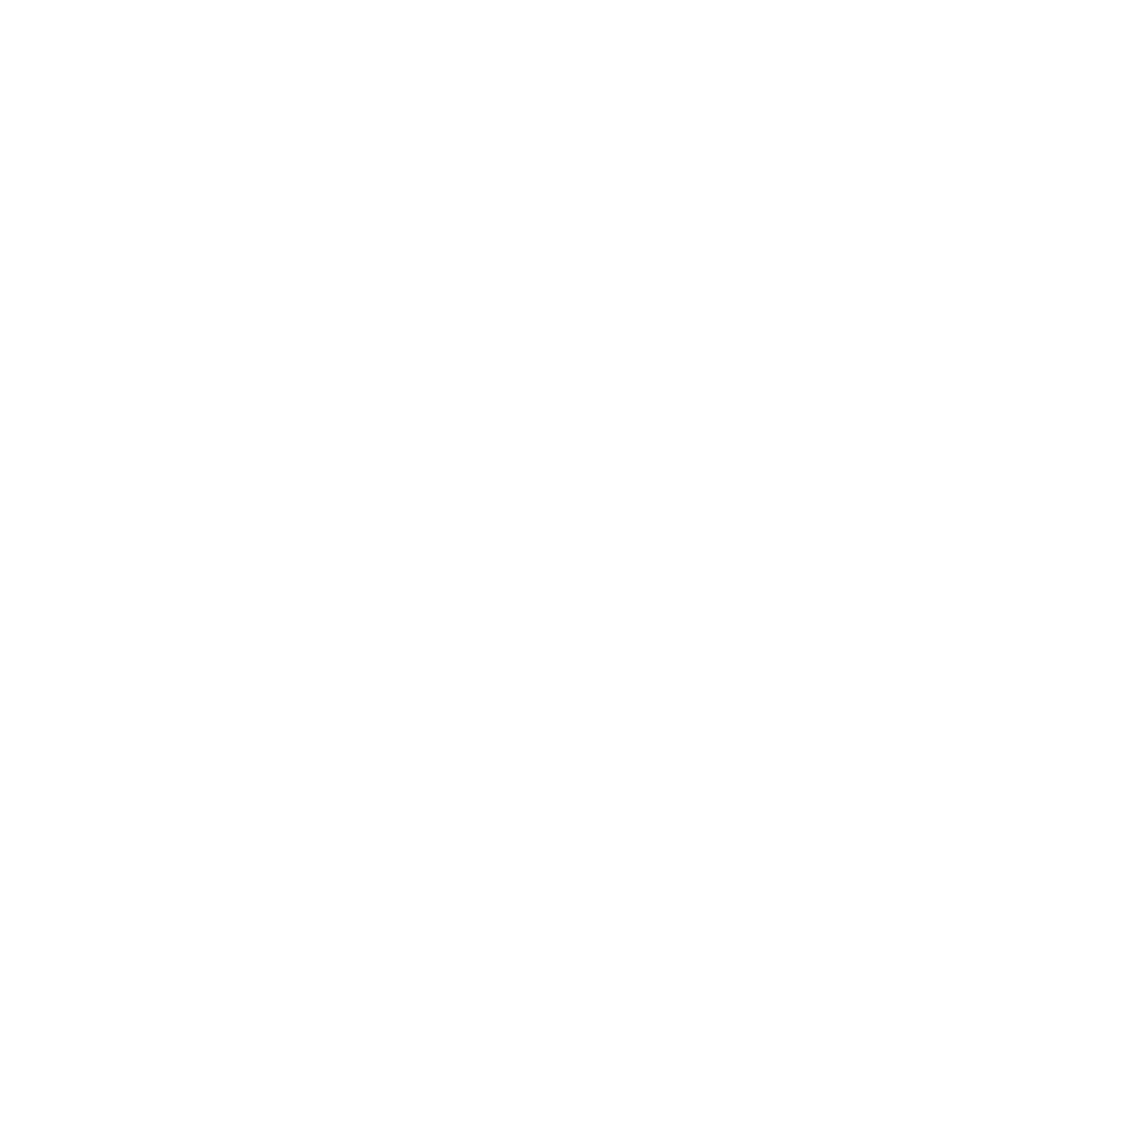 Overidea logo white.png